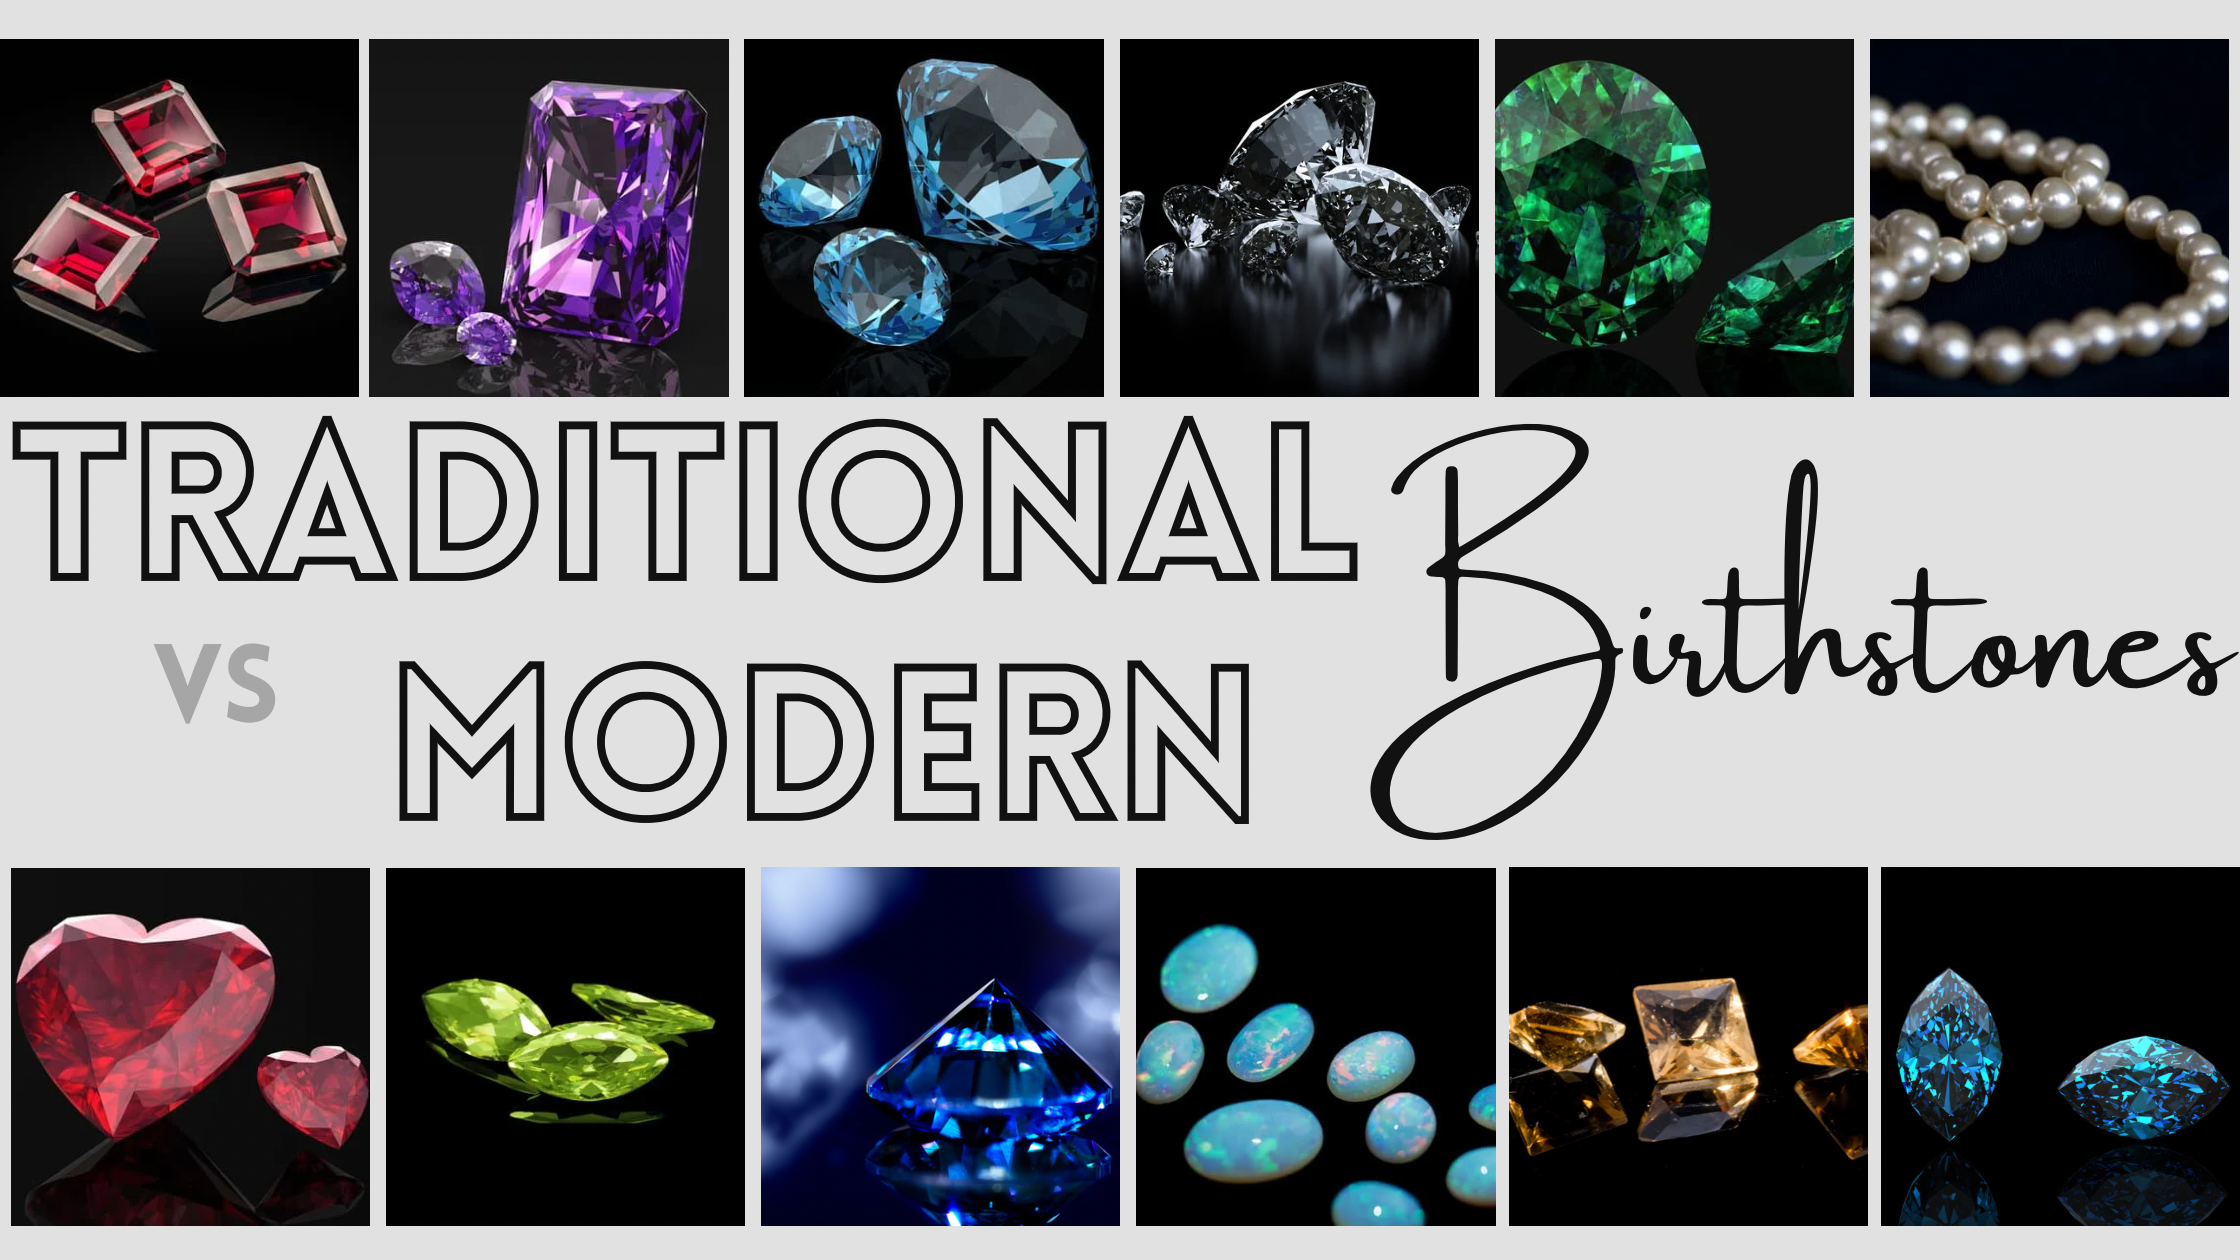 Traditional vs. Modern Birthstones